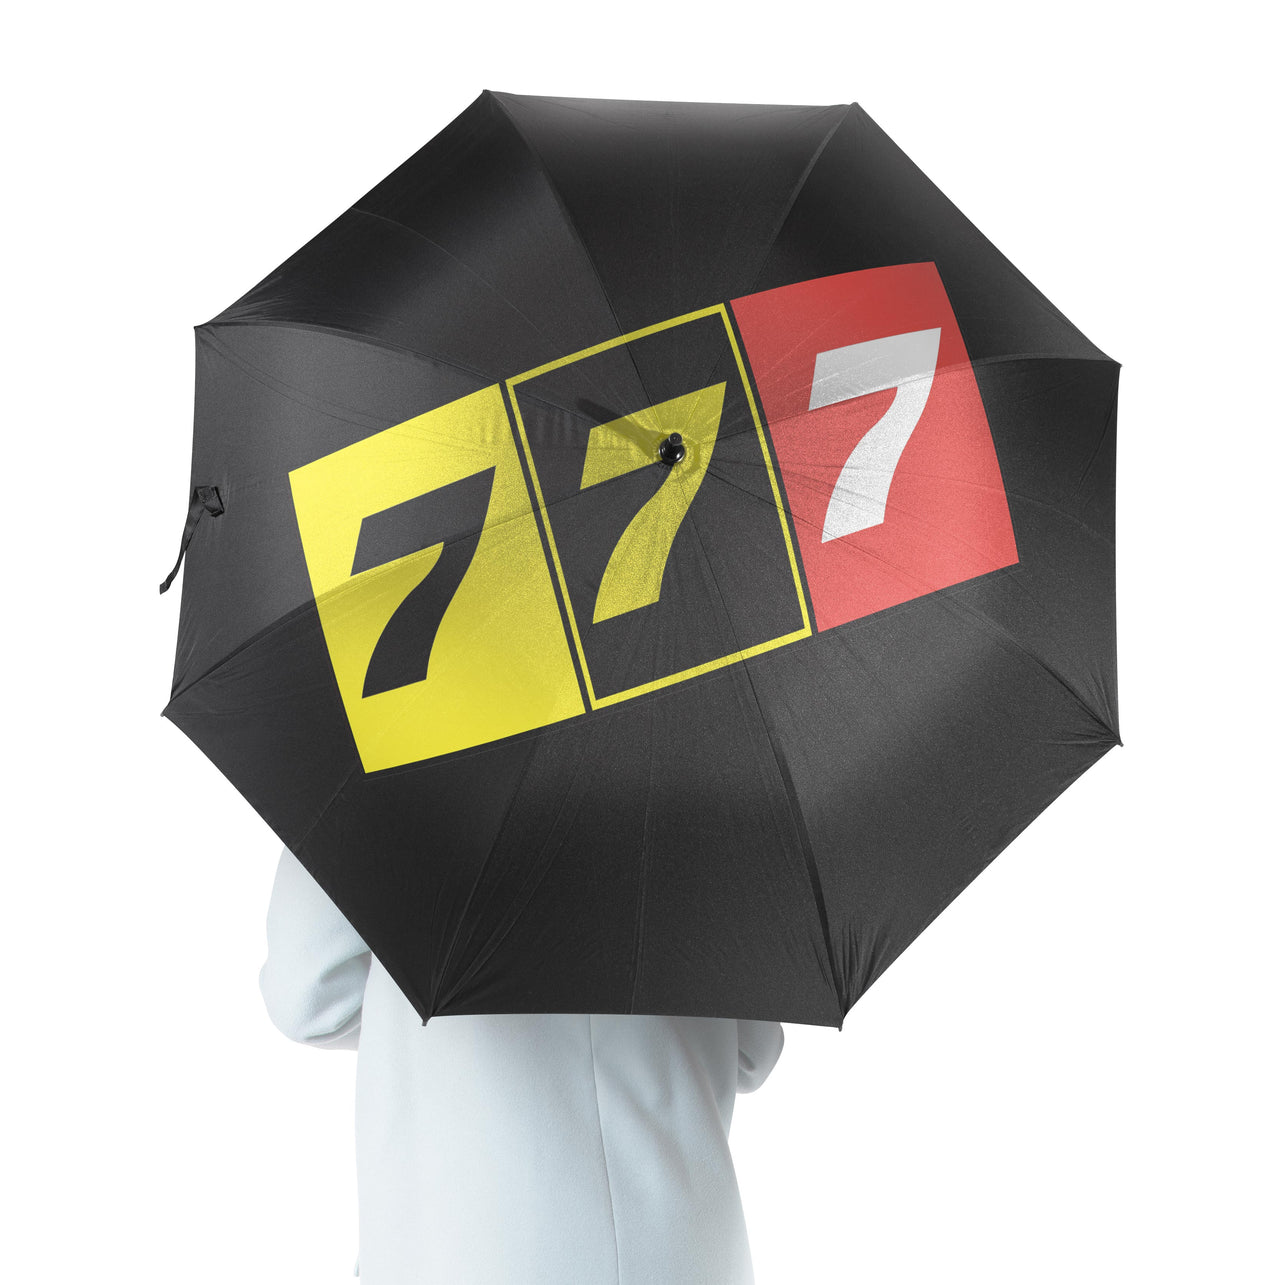 Flat Colourful 777 Designed Umbrella